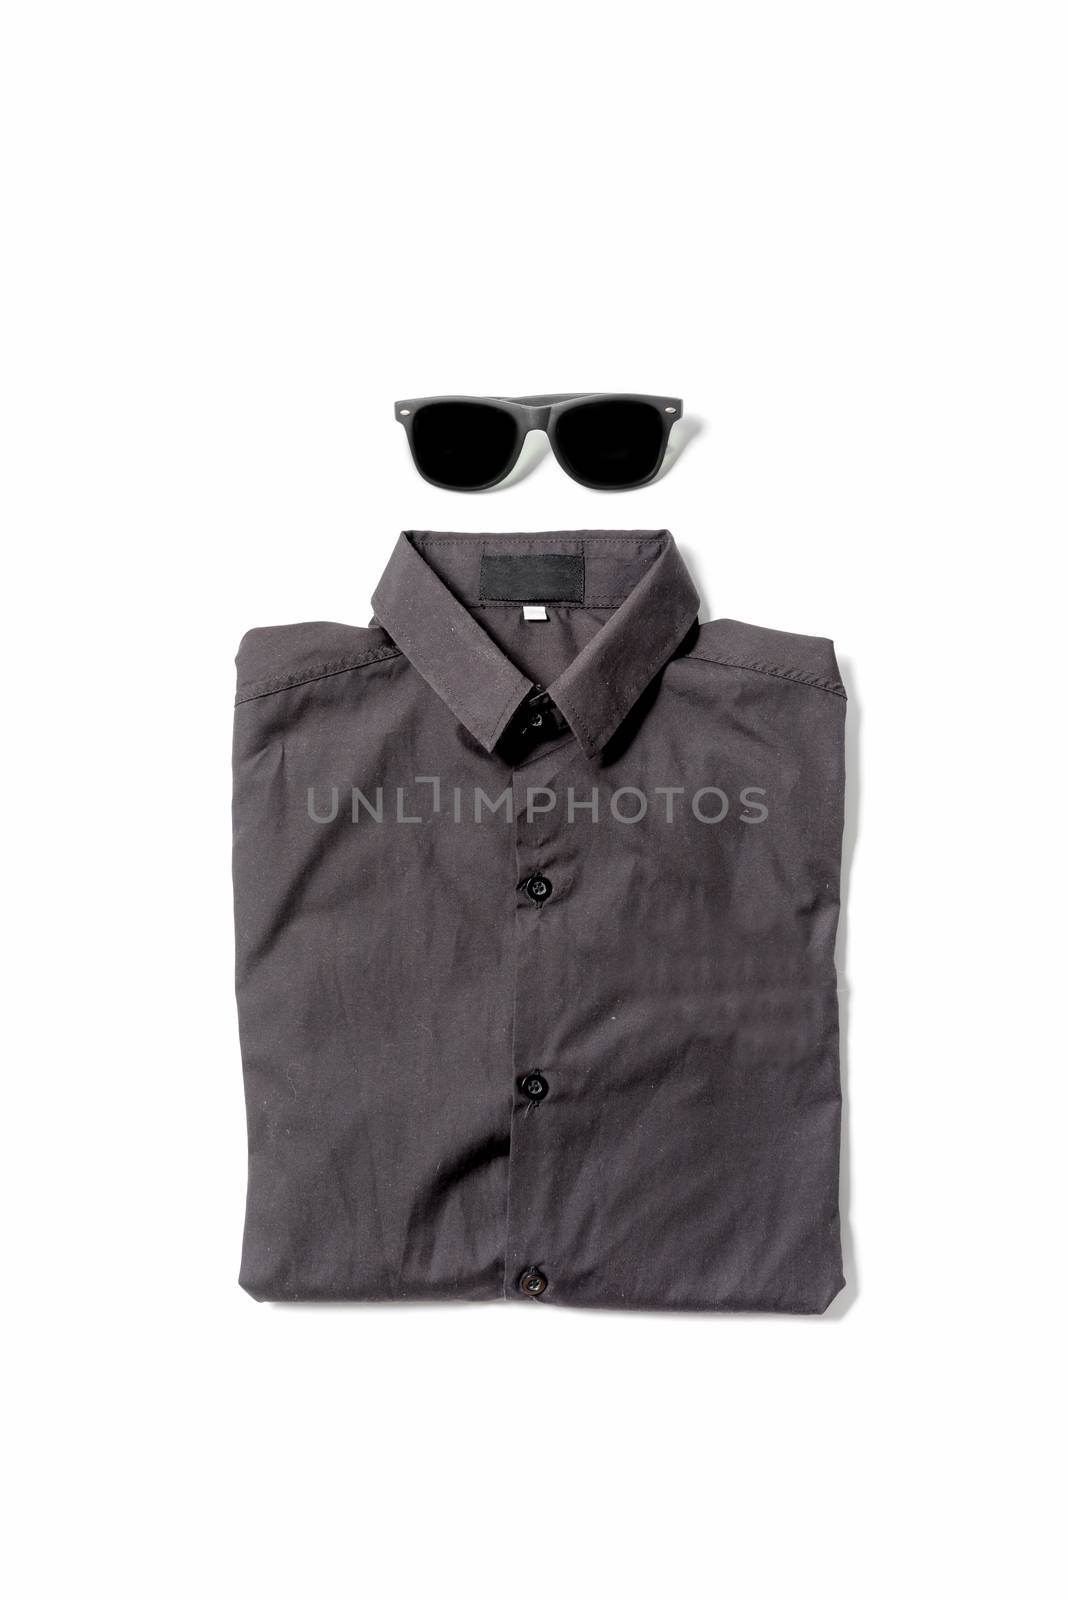 black shirt and sunglasses by ammza12